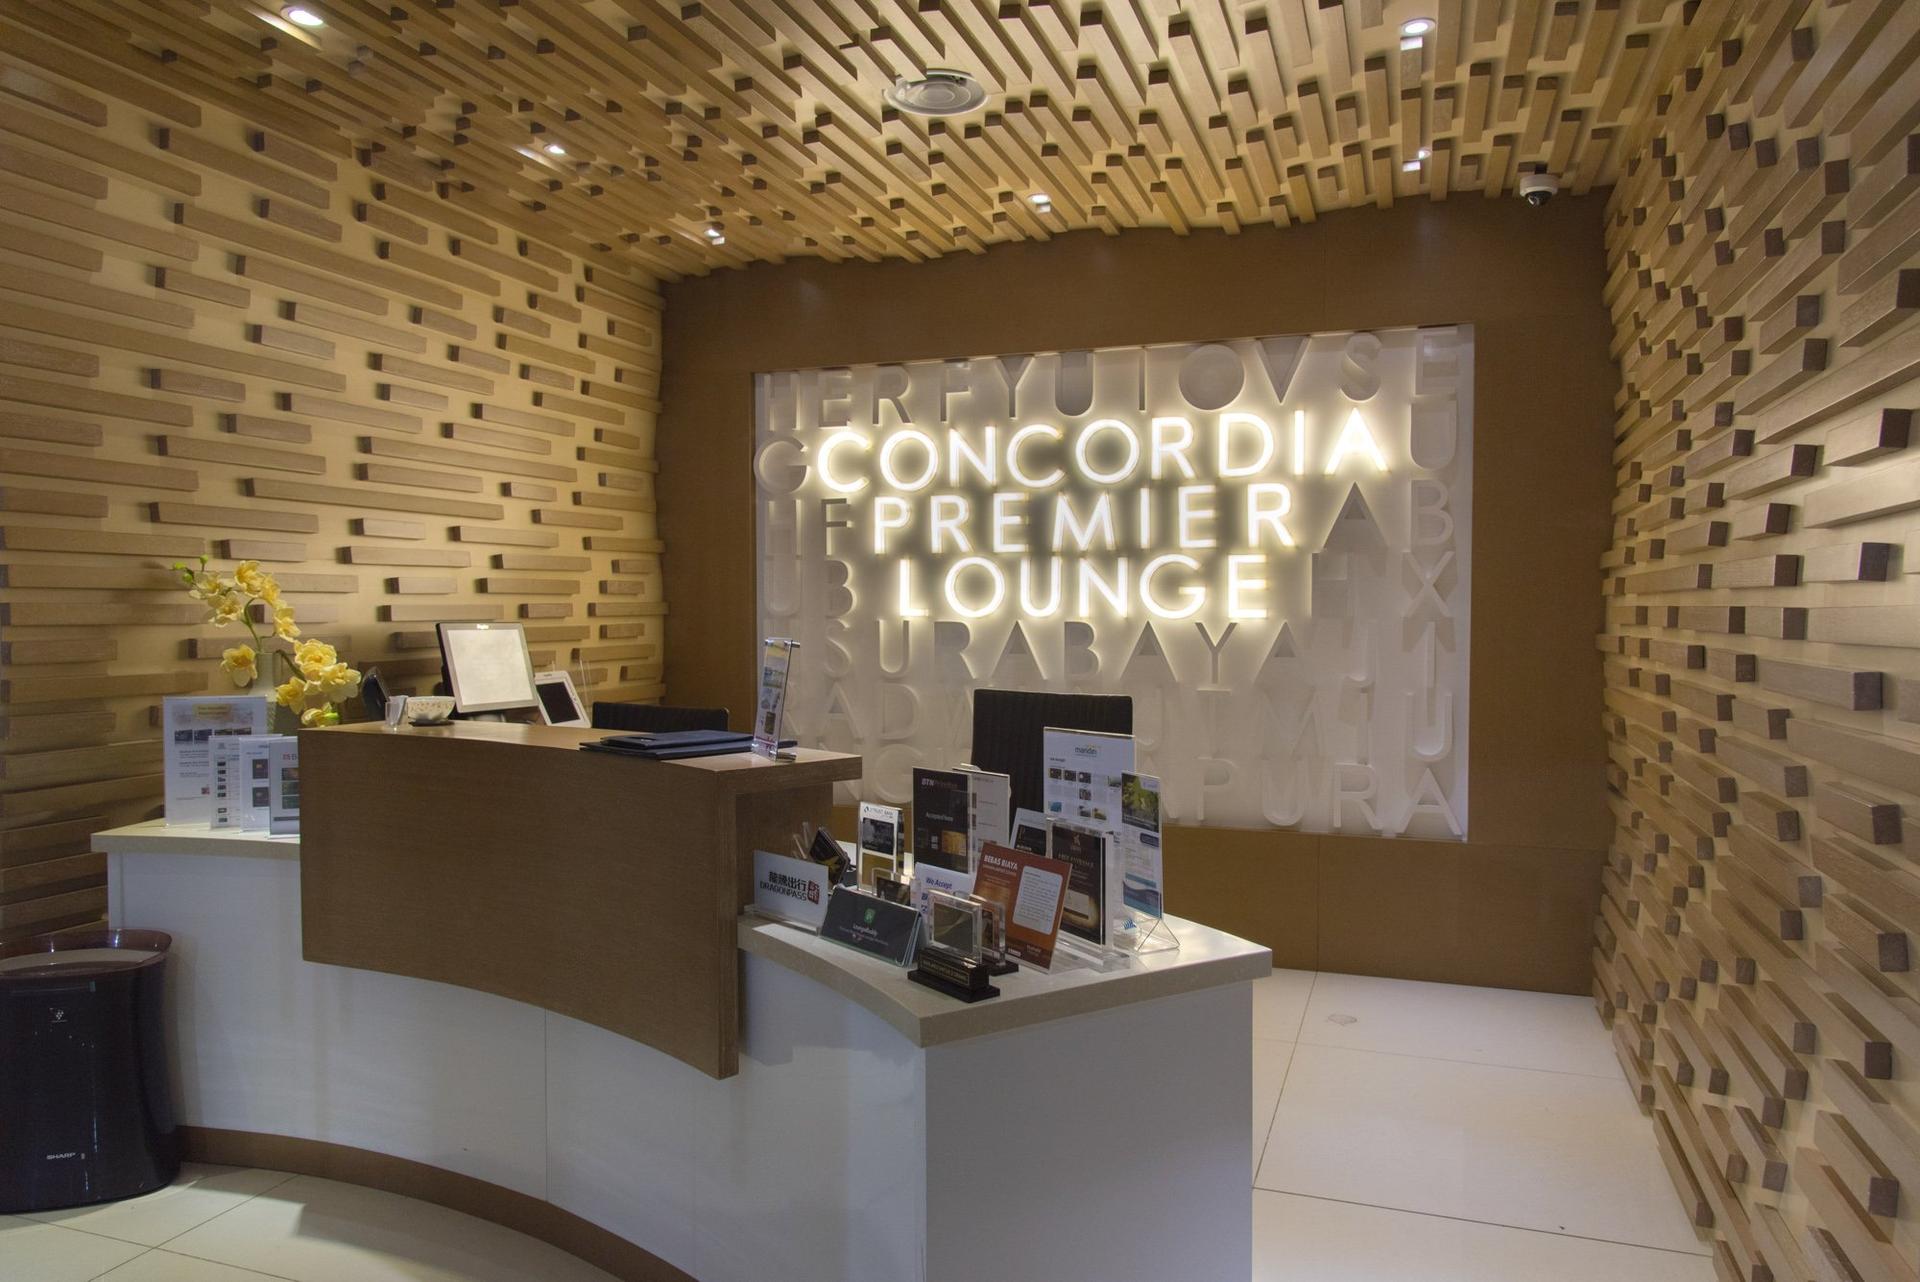 Concordia Premier Lounge image 19 of 81